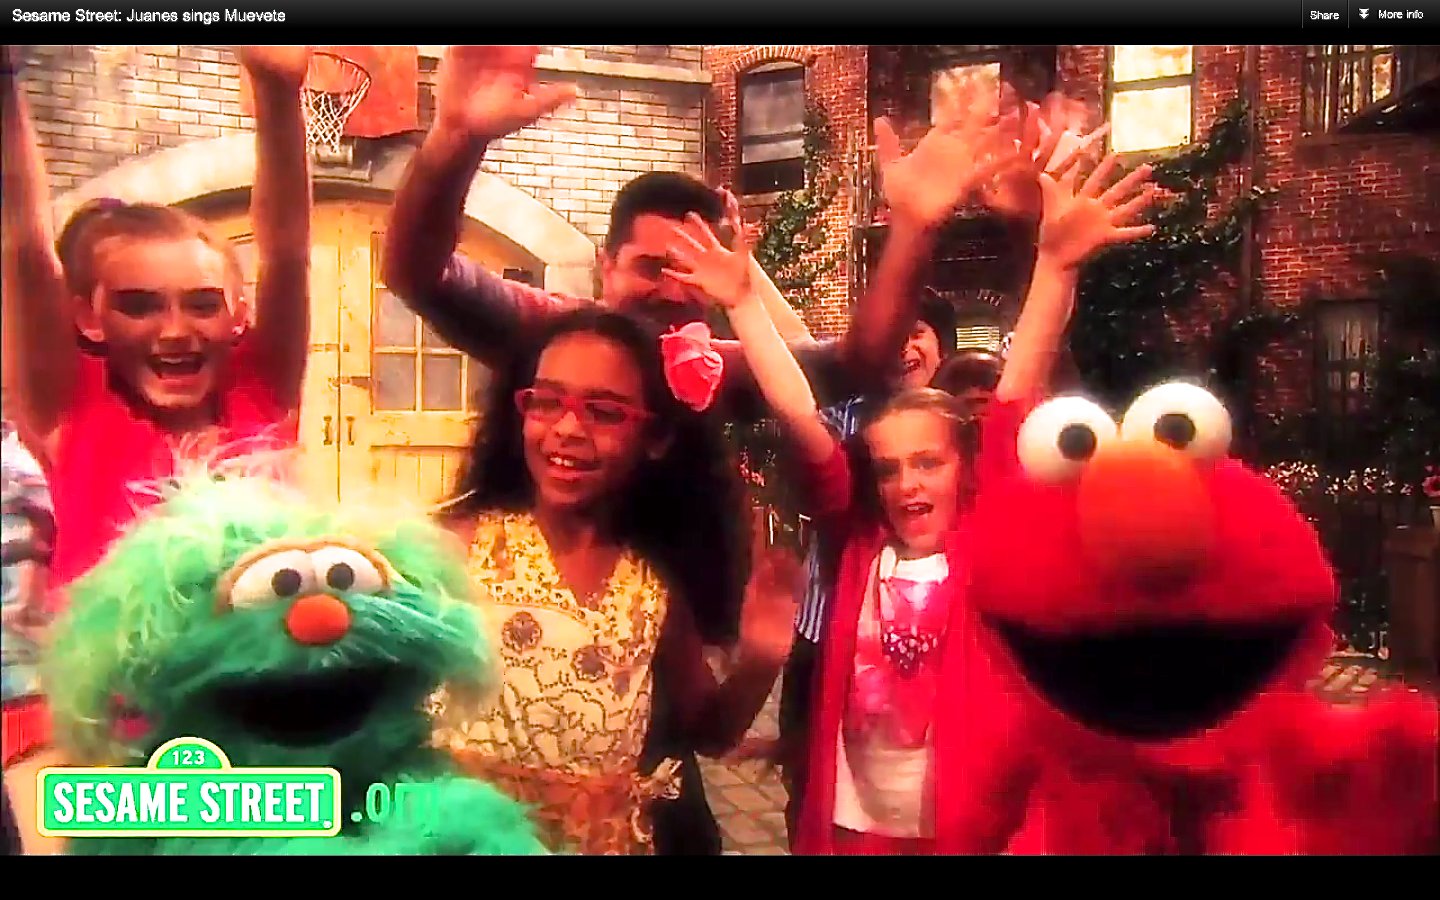 Meg Donnelly with Rosita, Elmo and Juanes - Sesame Street Episode 42